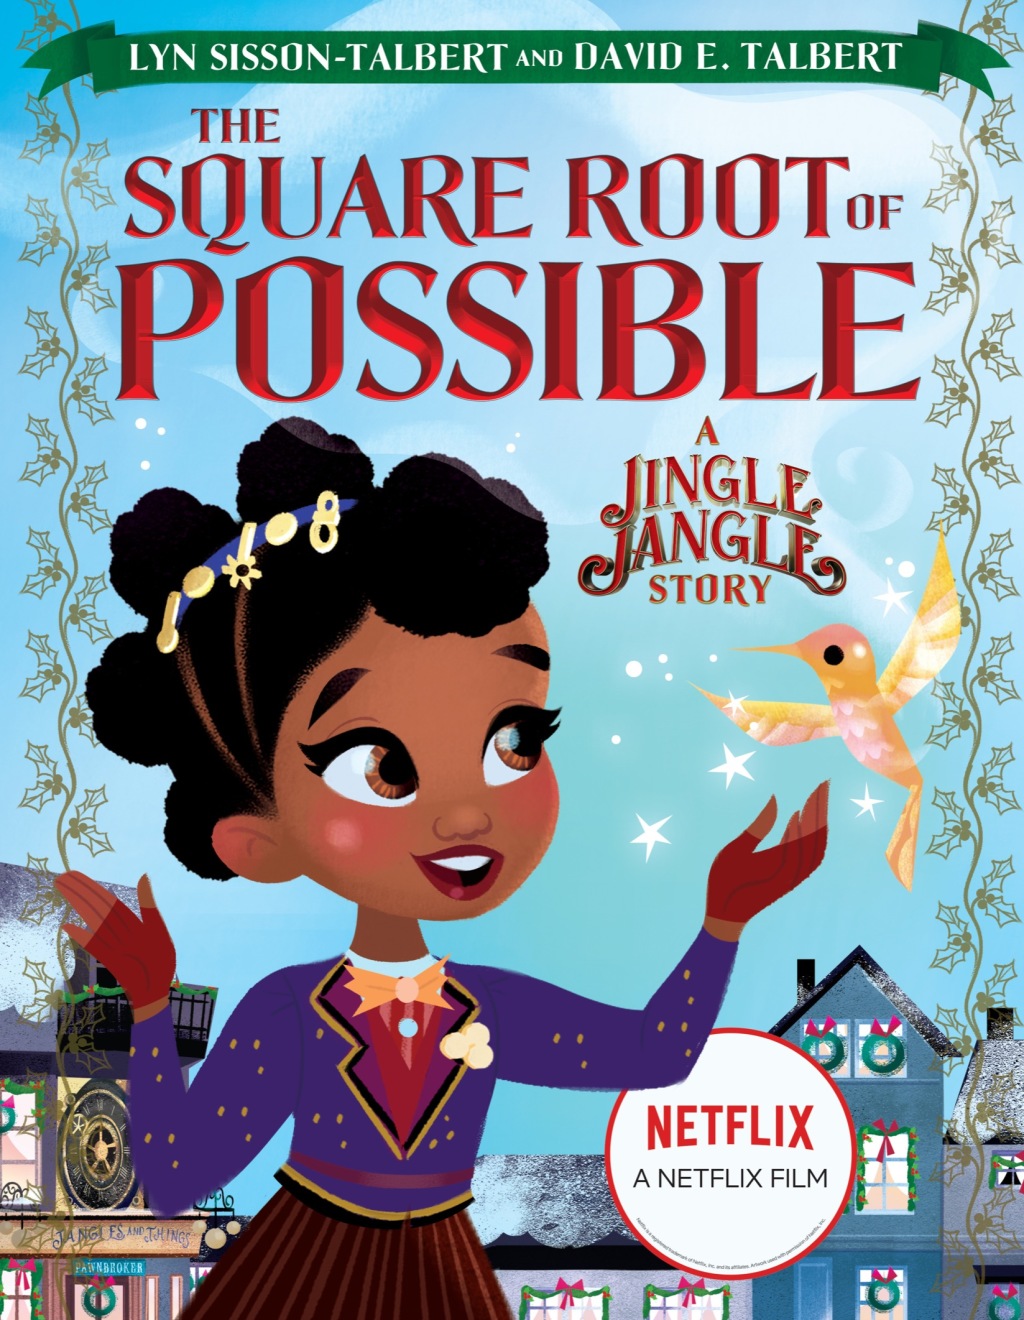 The Square Root of Possible: A Jingle Jangle Story (eBook) - Lyn Sisson-Talbert; David E. Talbert,